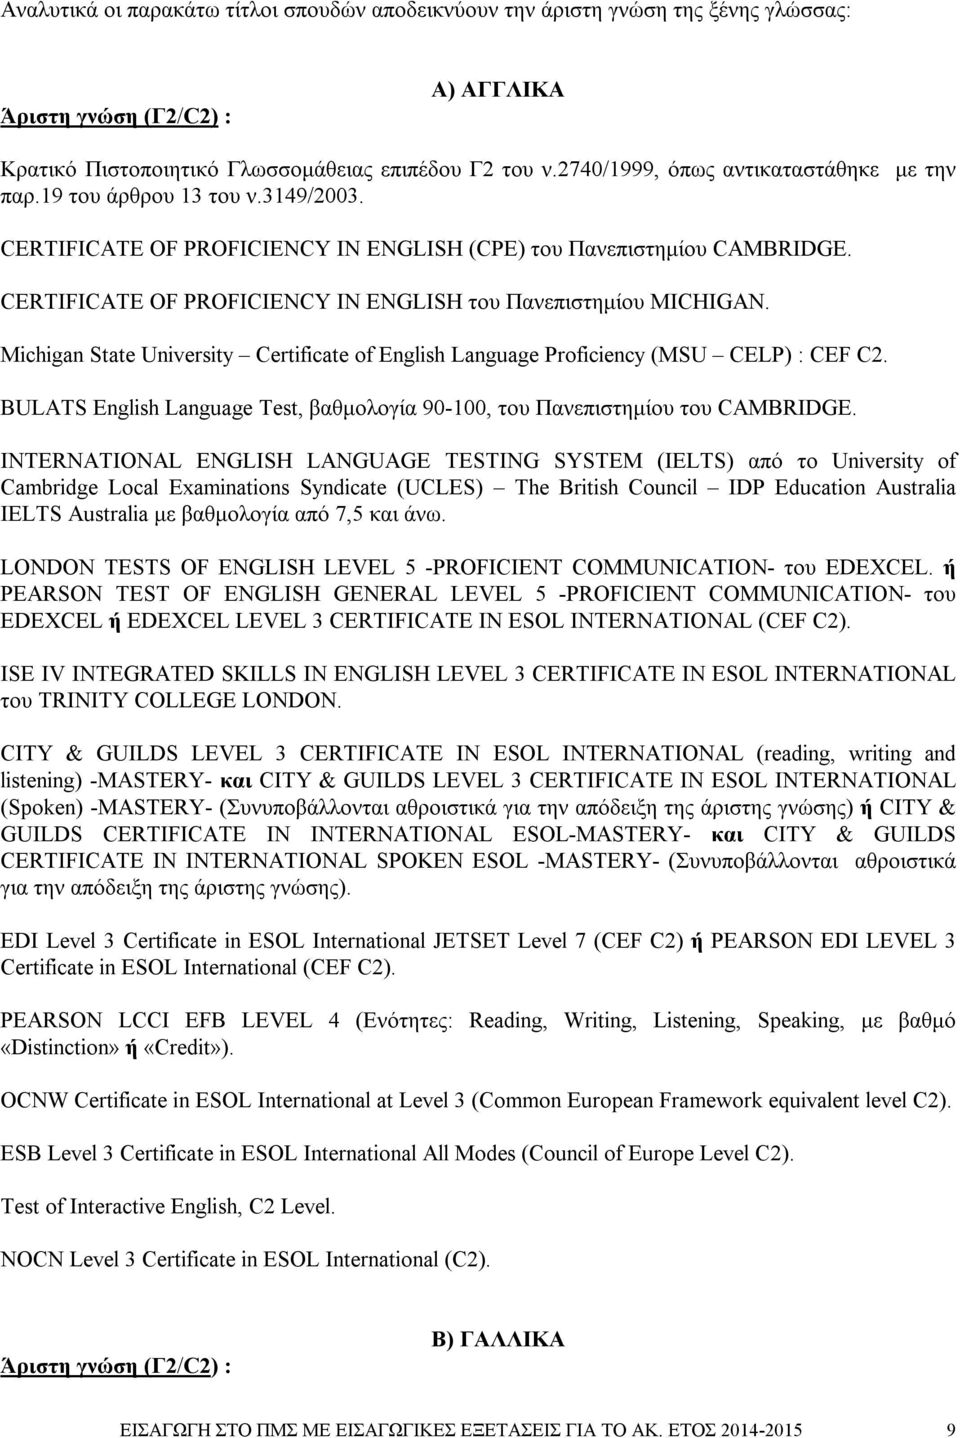 CERTIFICATE OF PROFICIENCY IN ENGLISH του Πανεπιστημίου MICHIGAN. Michigan State University Certificate of English Language Proficiency (MSU CELP) : CEF C2.